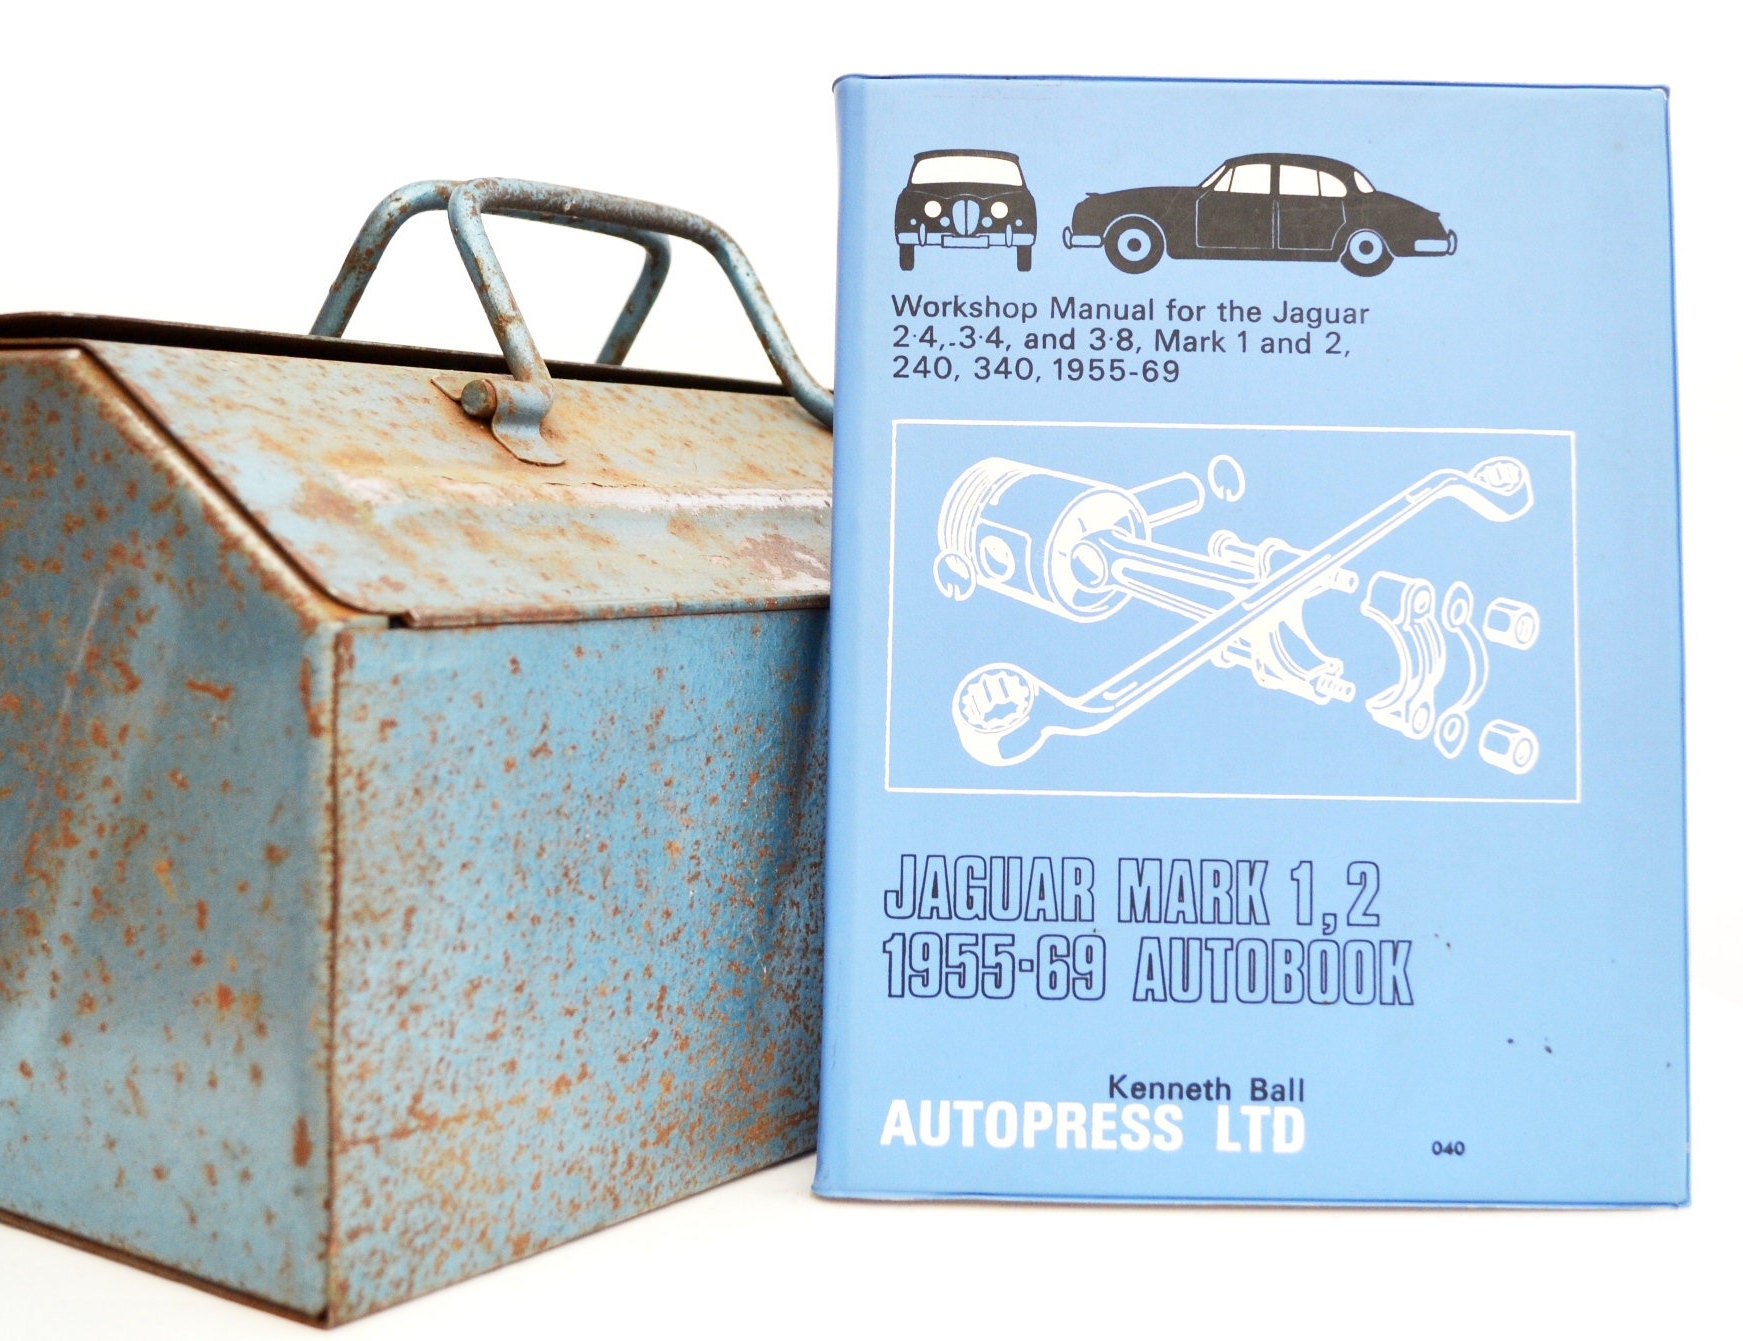 Autobook Jaguar Workshop Manual Jaguar Mk 1 & 2 Owners | Etsy